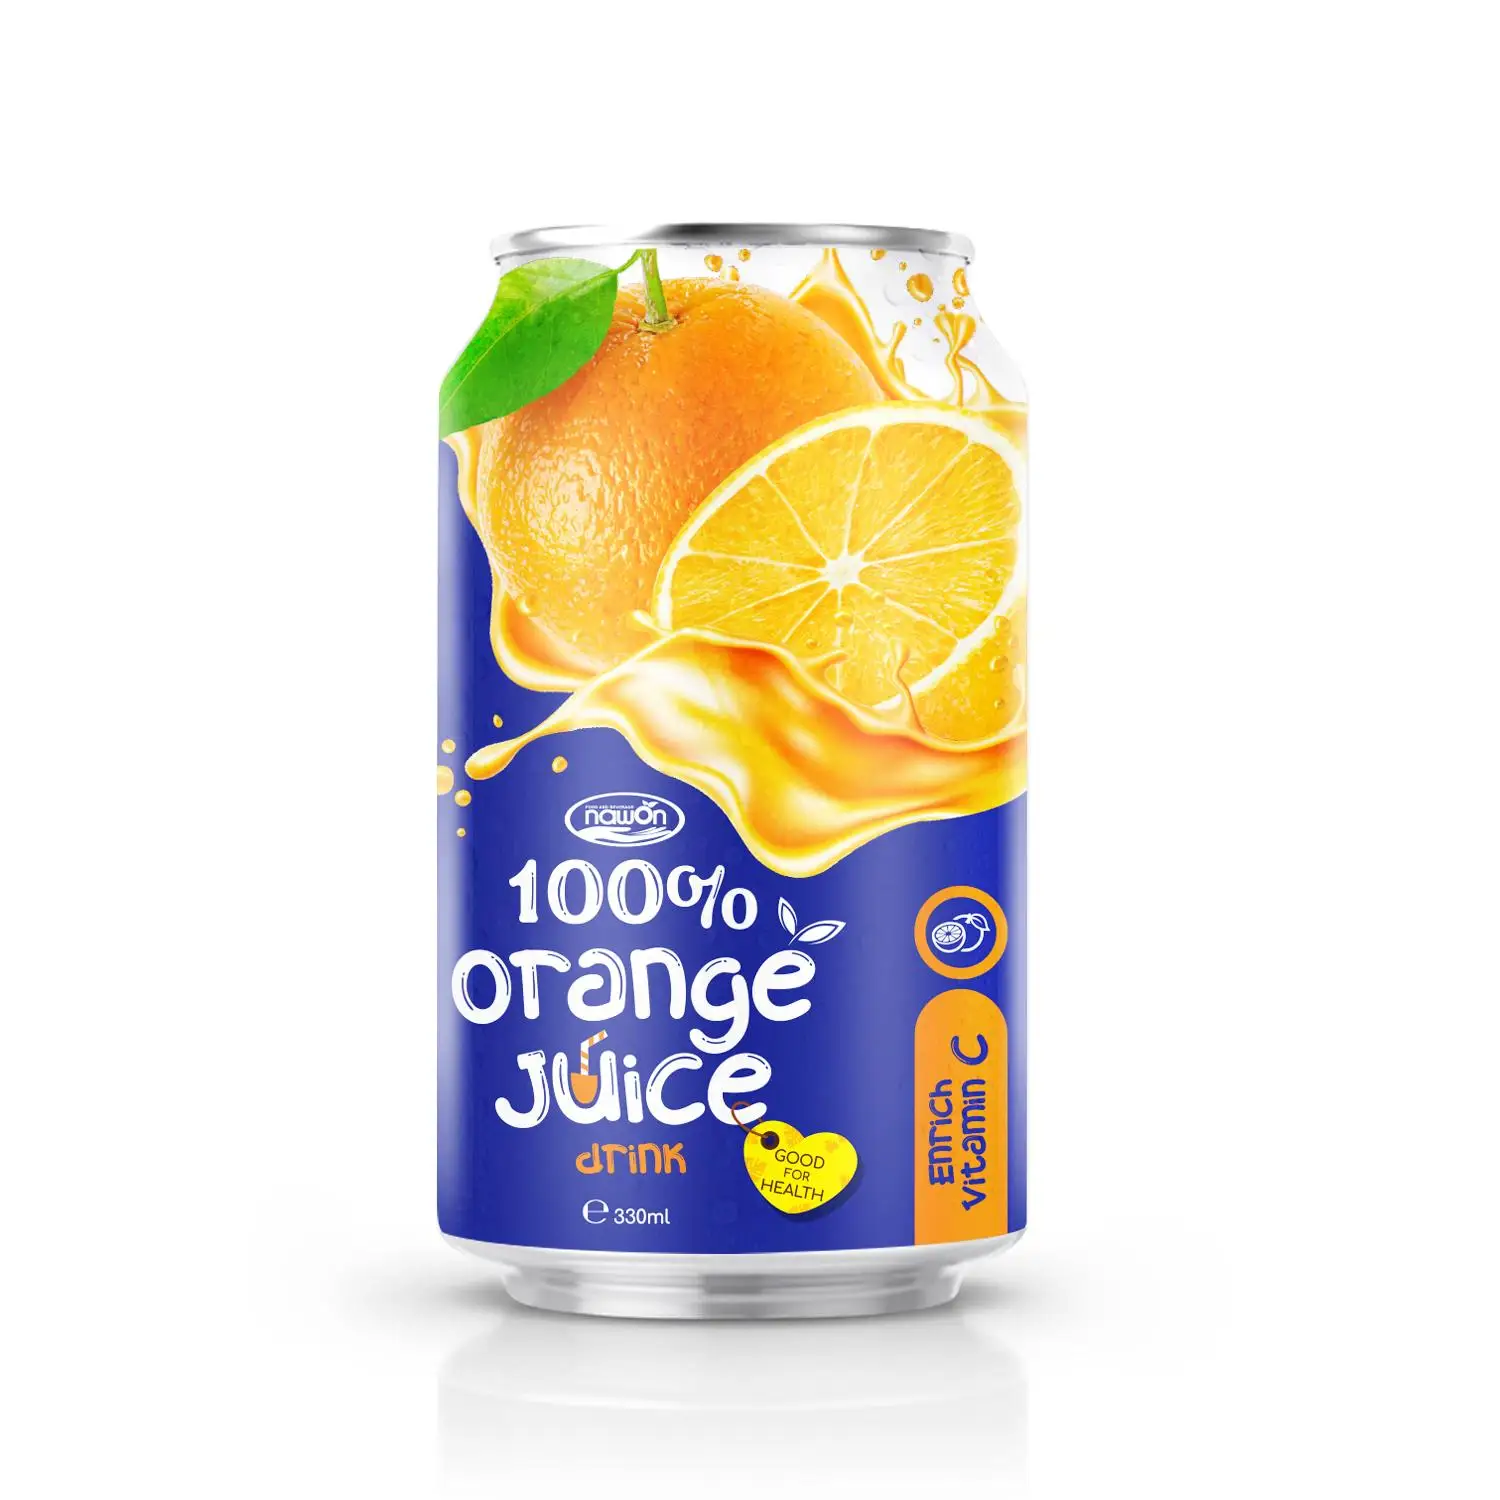 330ml Orange Juice. Uni Juice апельсин. Canned Orange Juice. Vitamin Juice.